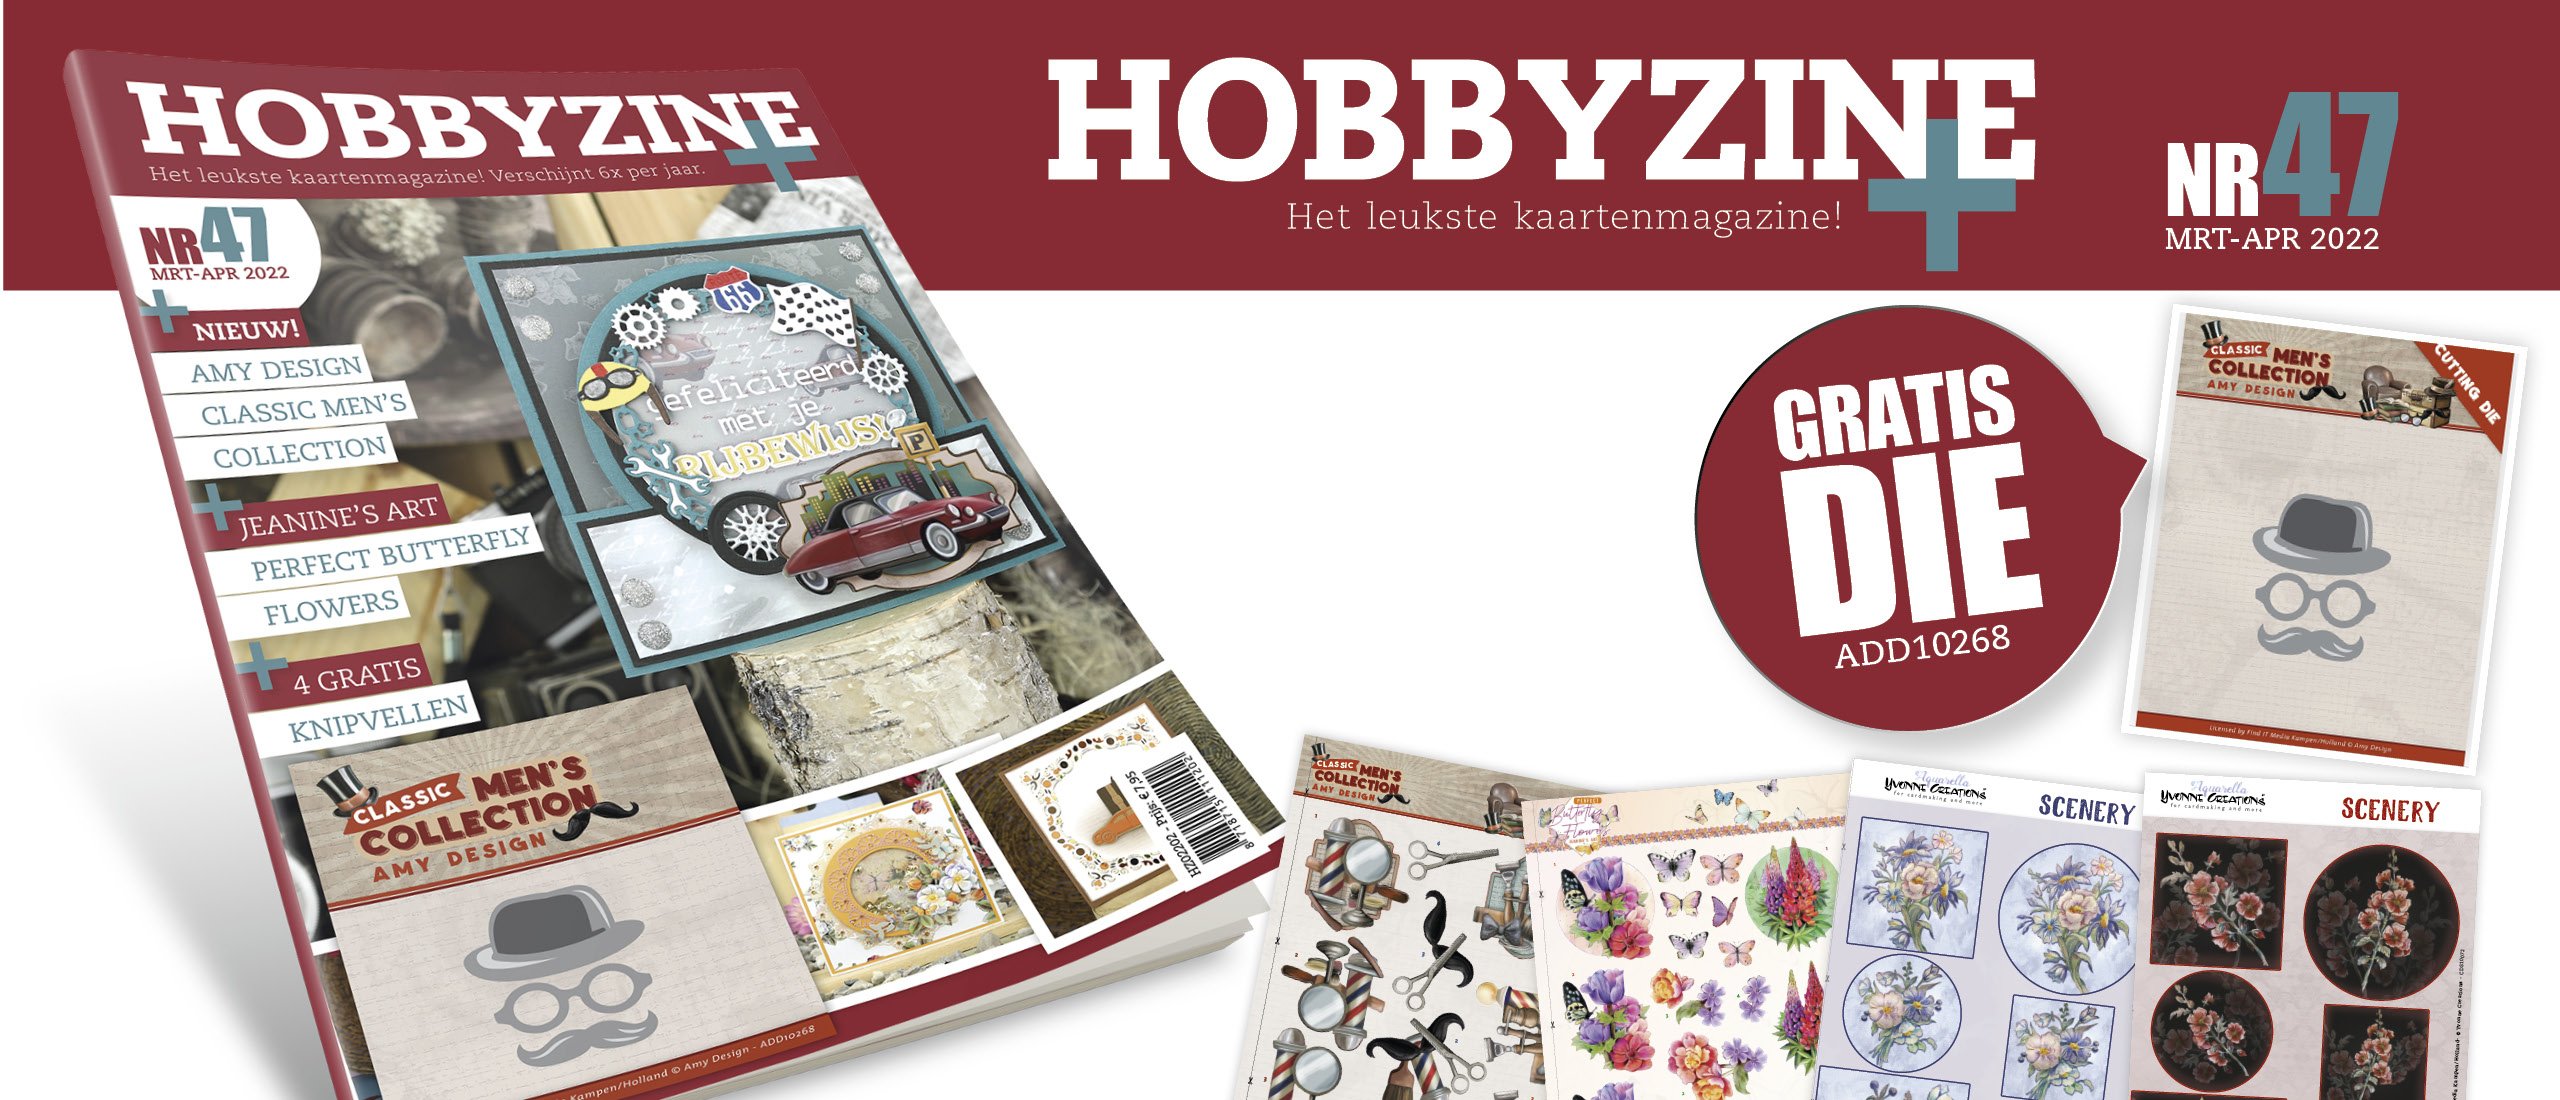 Gratis Scenery en knipvellen vind je achterin Hobbyzine Plus 47!